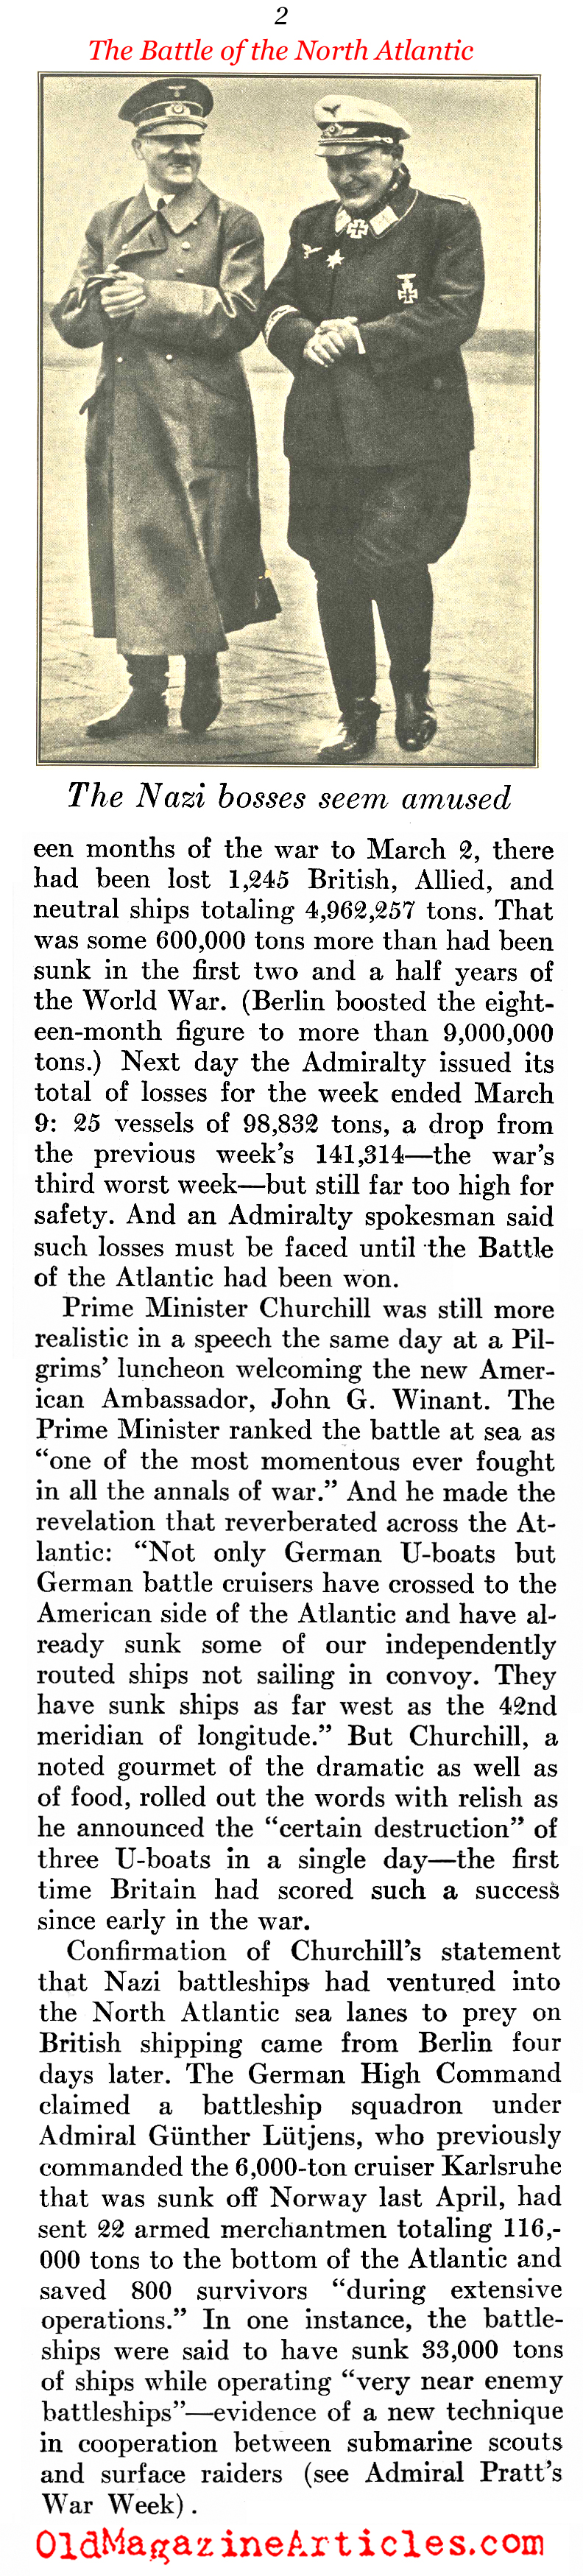 The North Atlantic Heats Up (Newsweek Magazine, 1941)